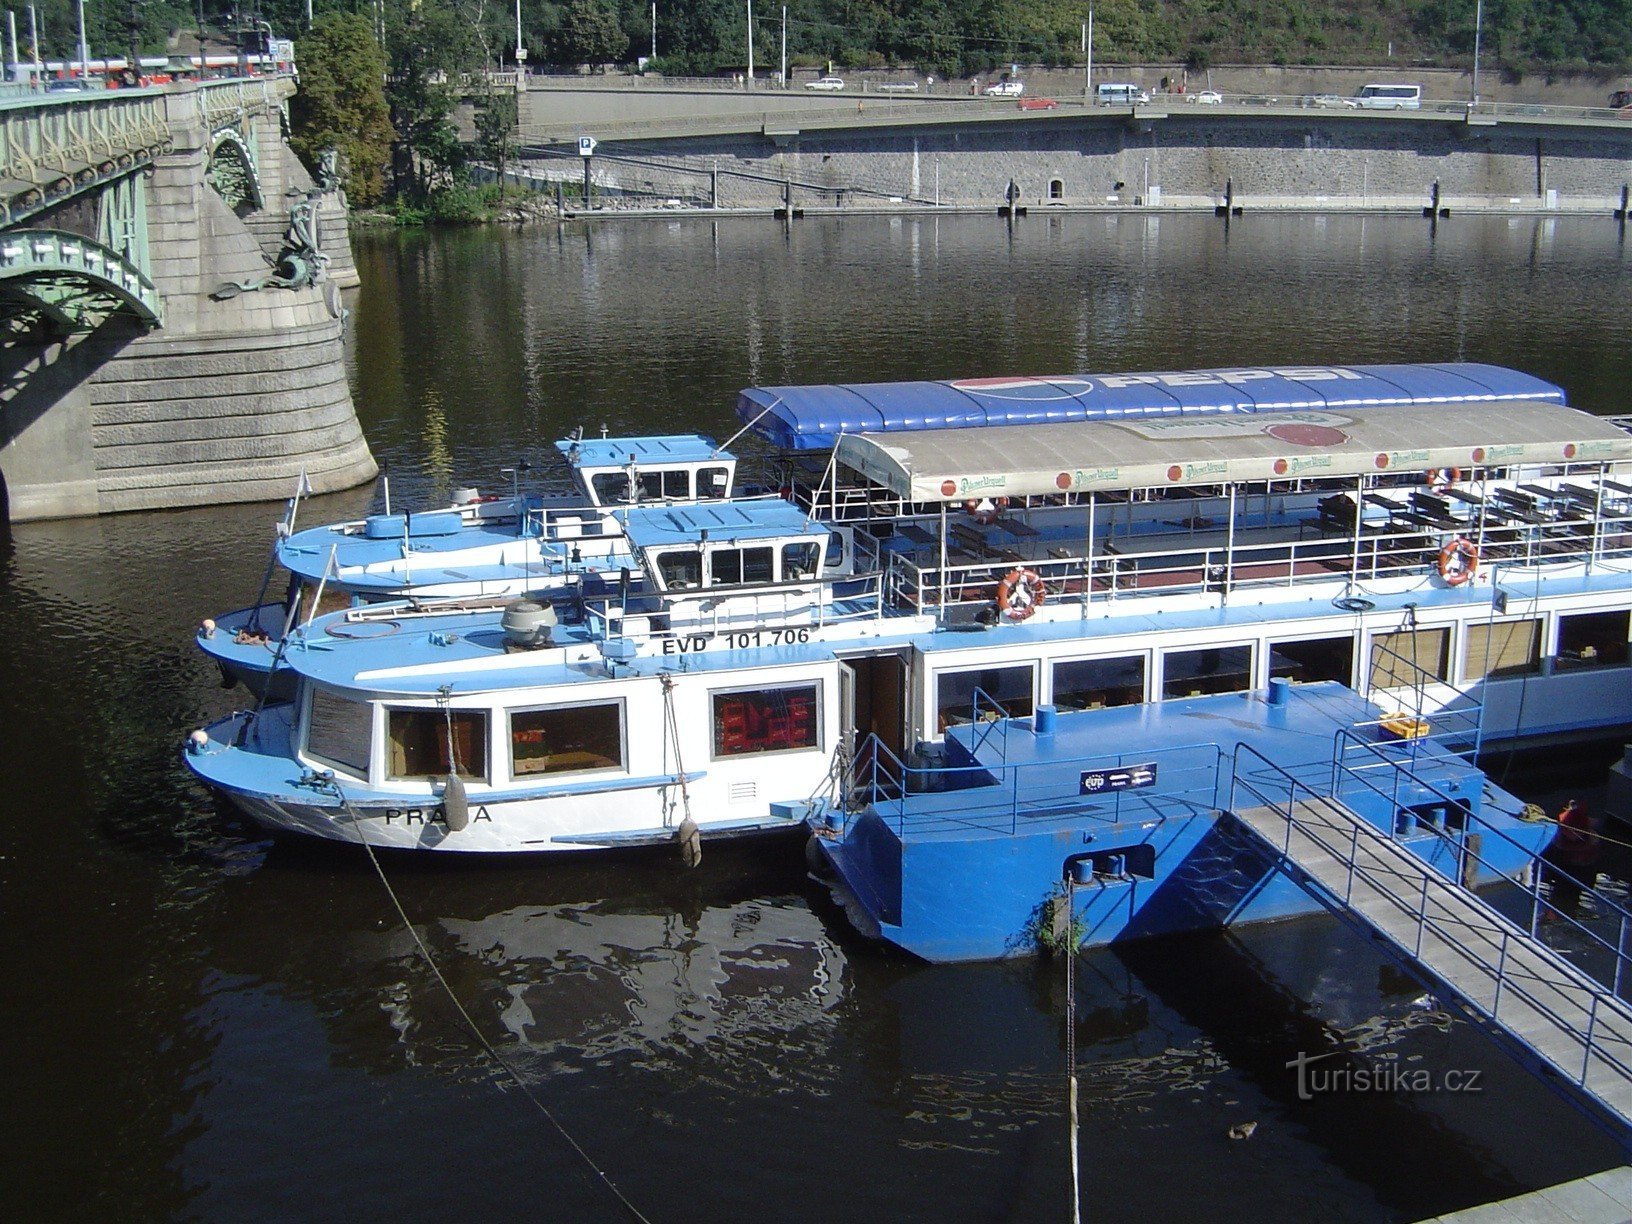 Plavba lodí v Praze po Vltavě